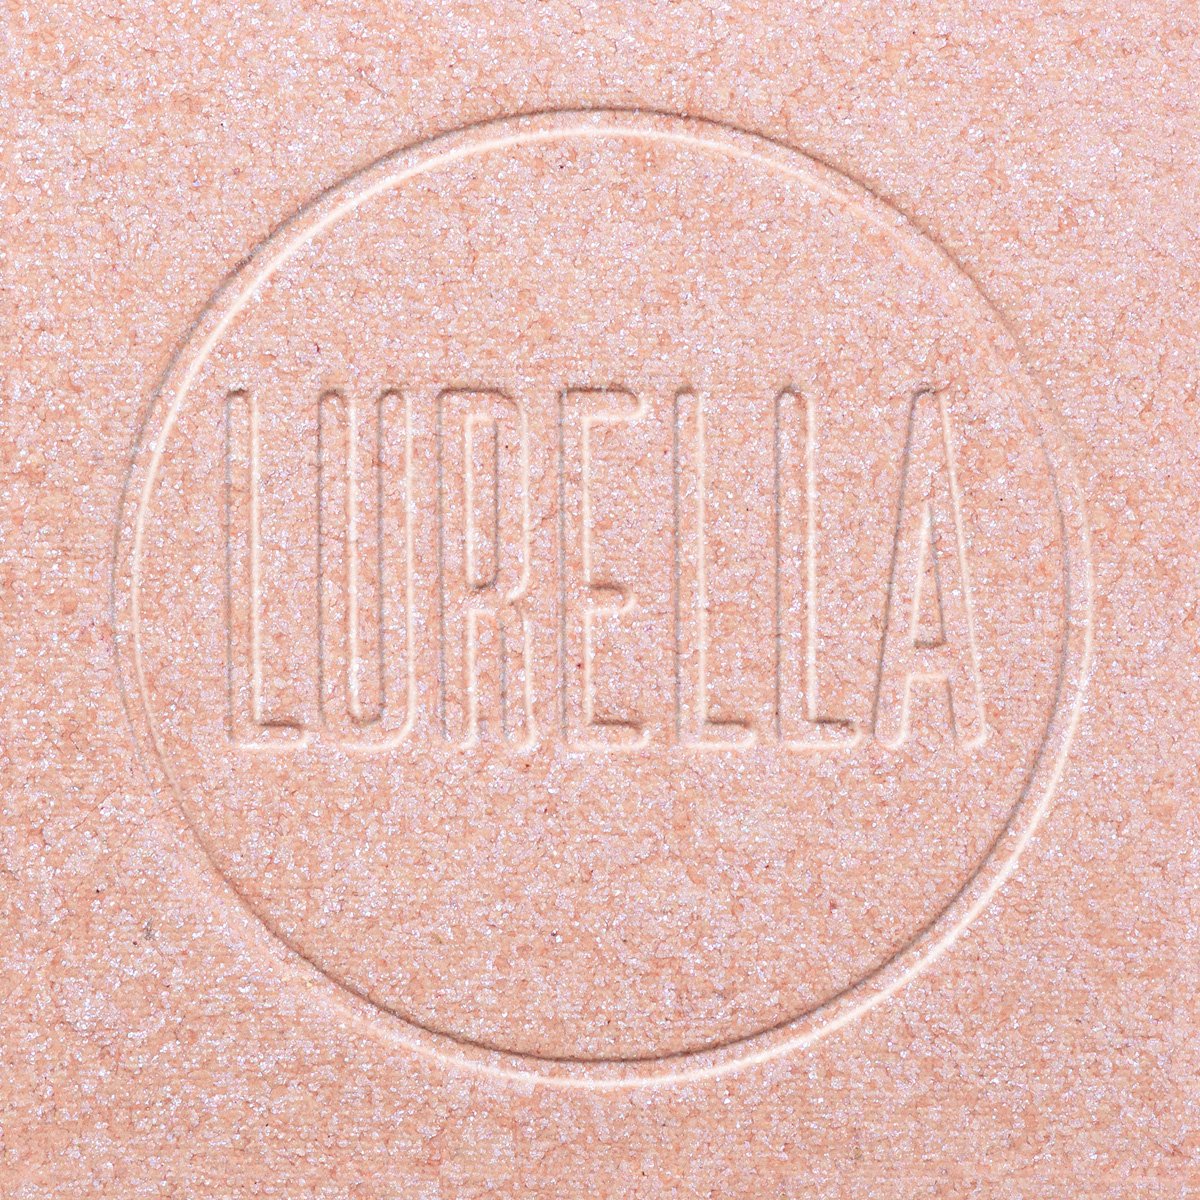 Lurella Cosmetics - Highlighter Smell The Lavender